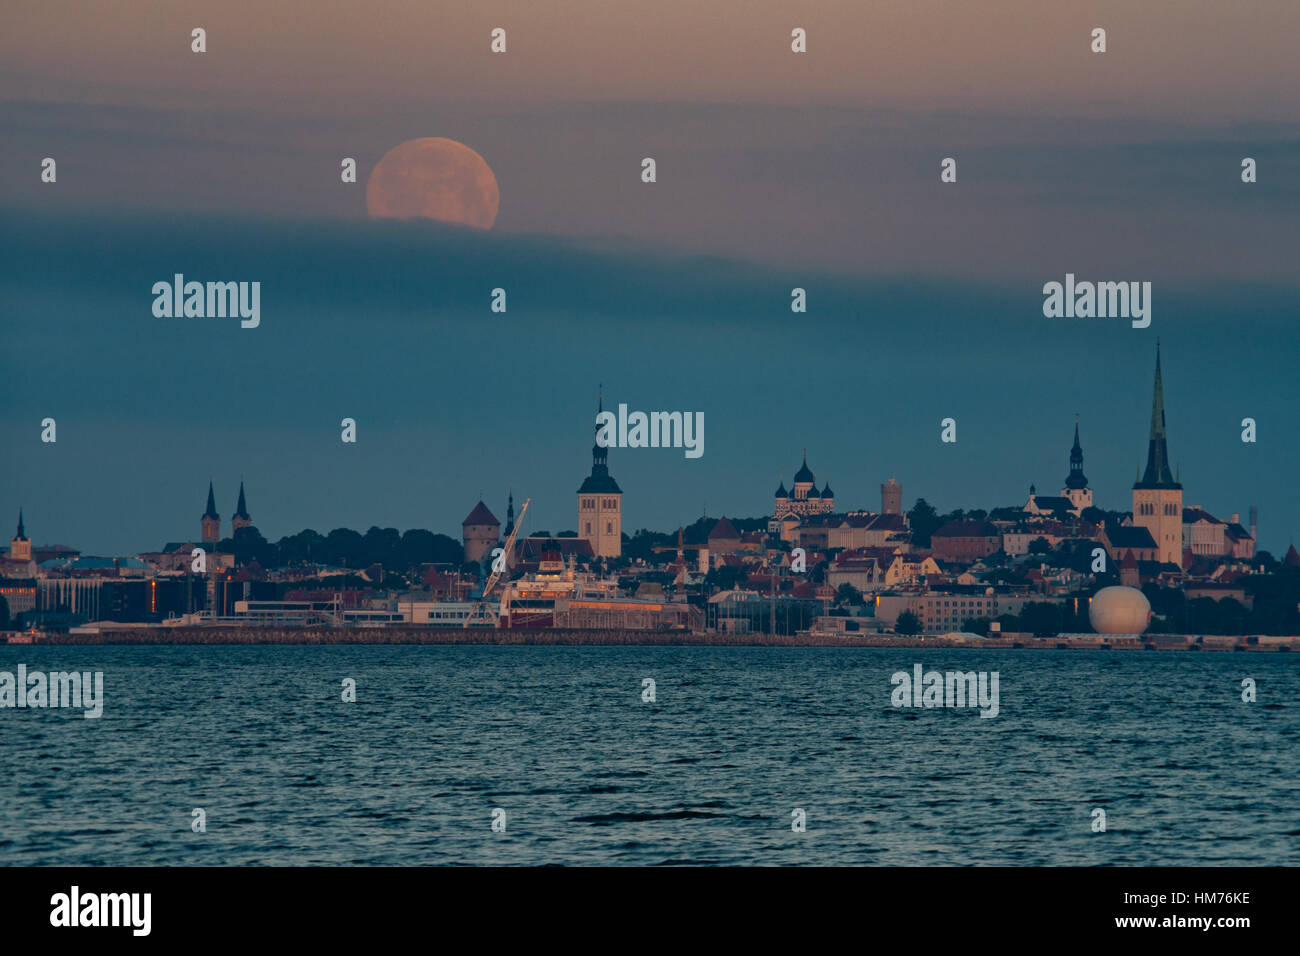 Full moon over Old town of Tallinn city, Estonia. Moonset before sunrise Stock Photo